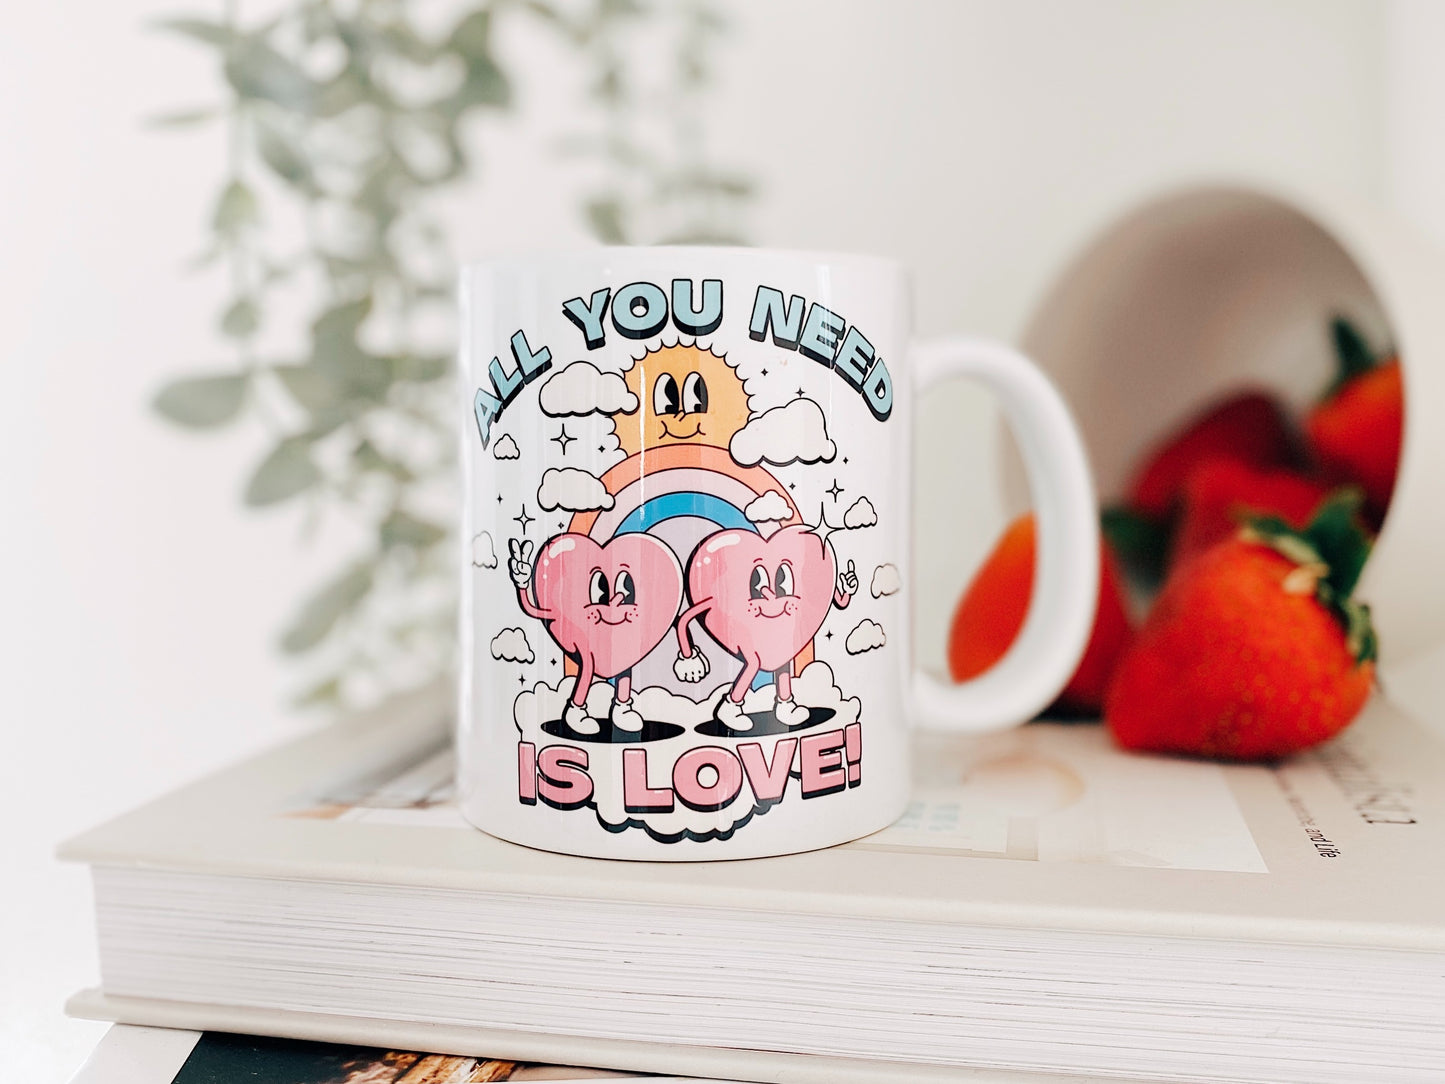 All You Need Is Love - Mug